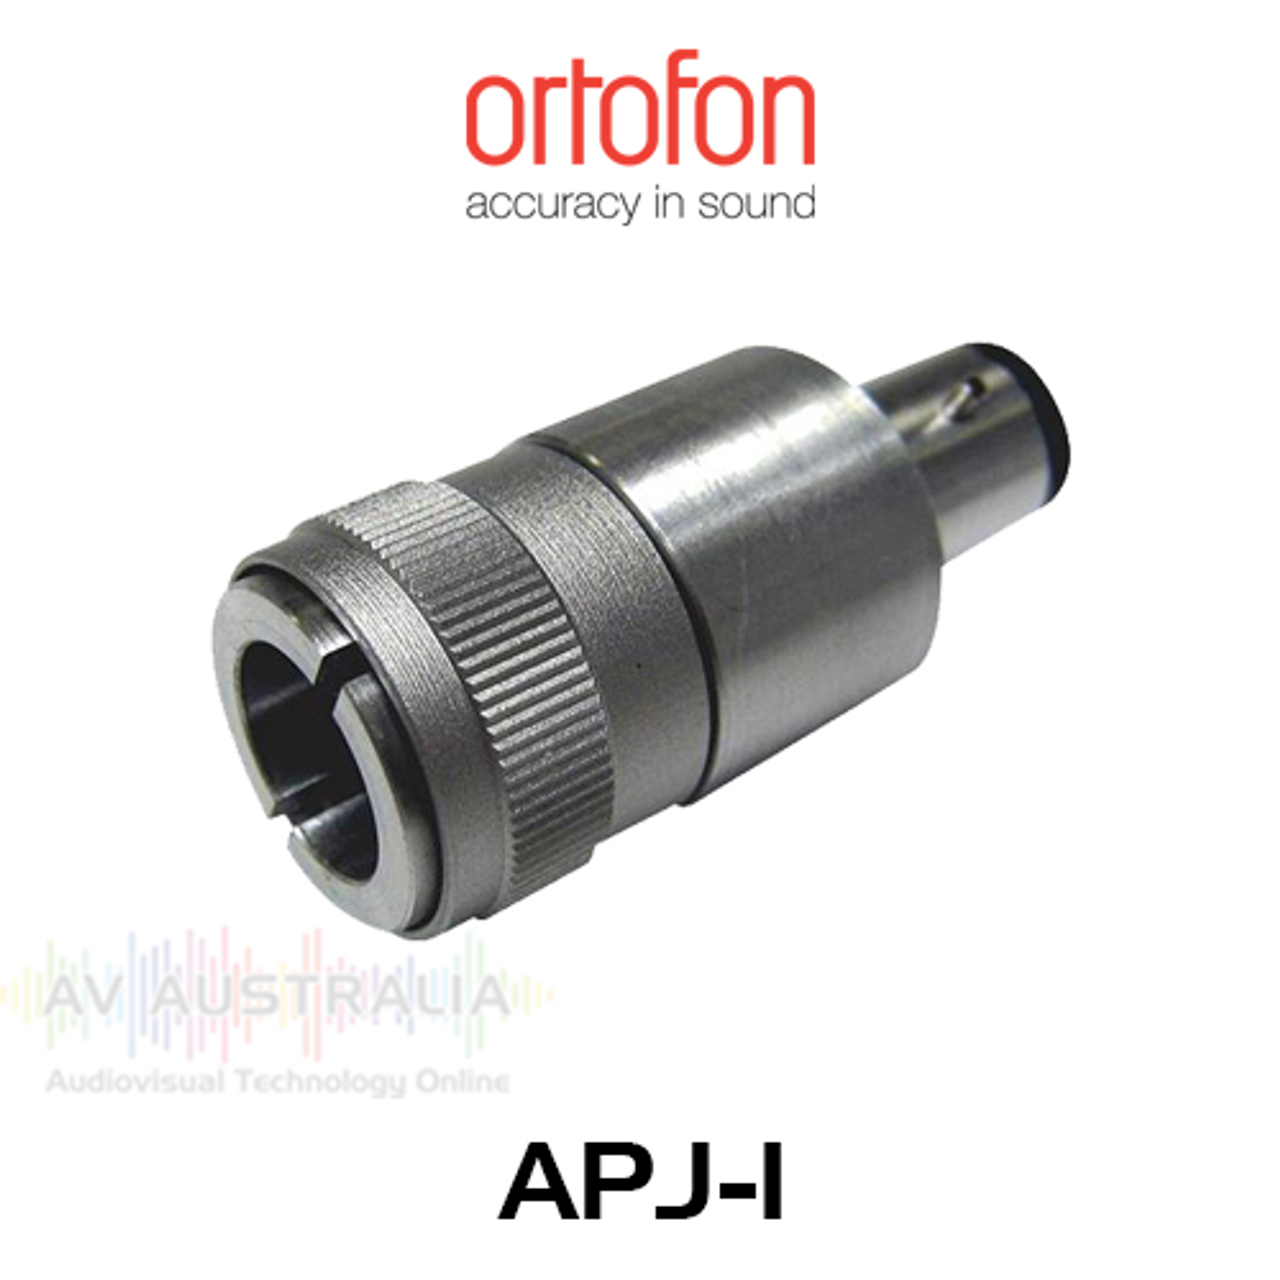 Ortofon Hi-Fi APJ-1 Shell Adapter